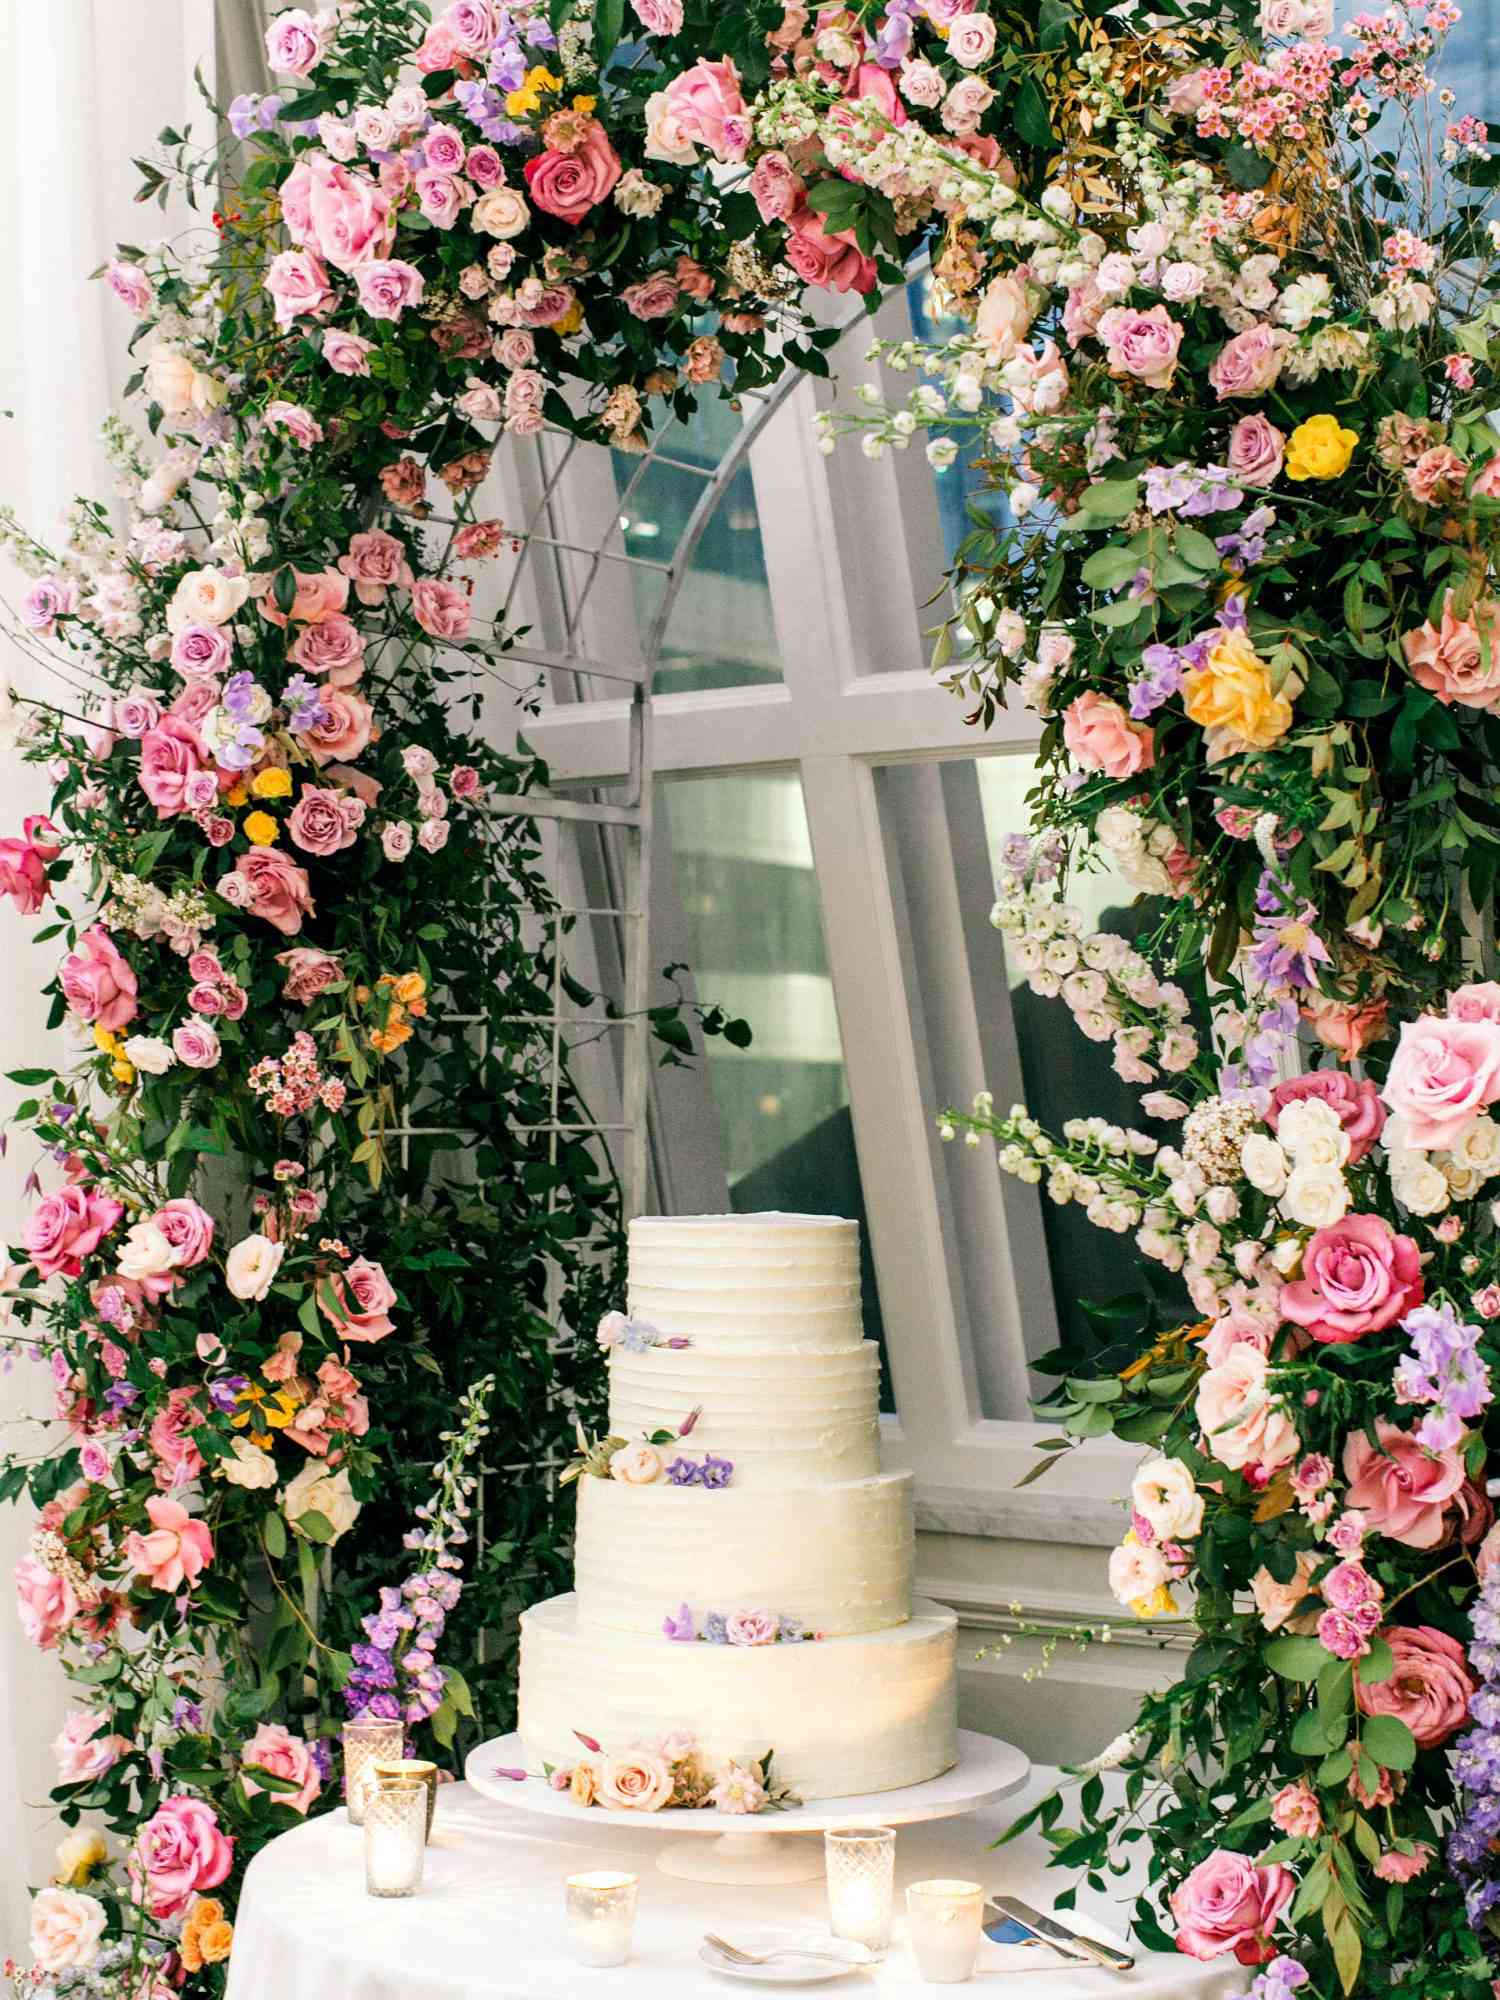 stephanie joe wedding cake and floral arch